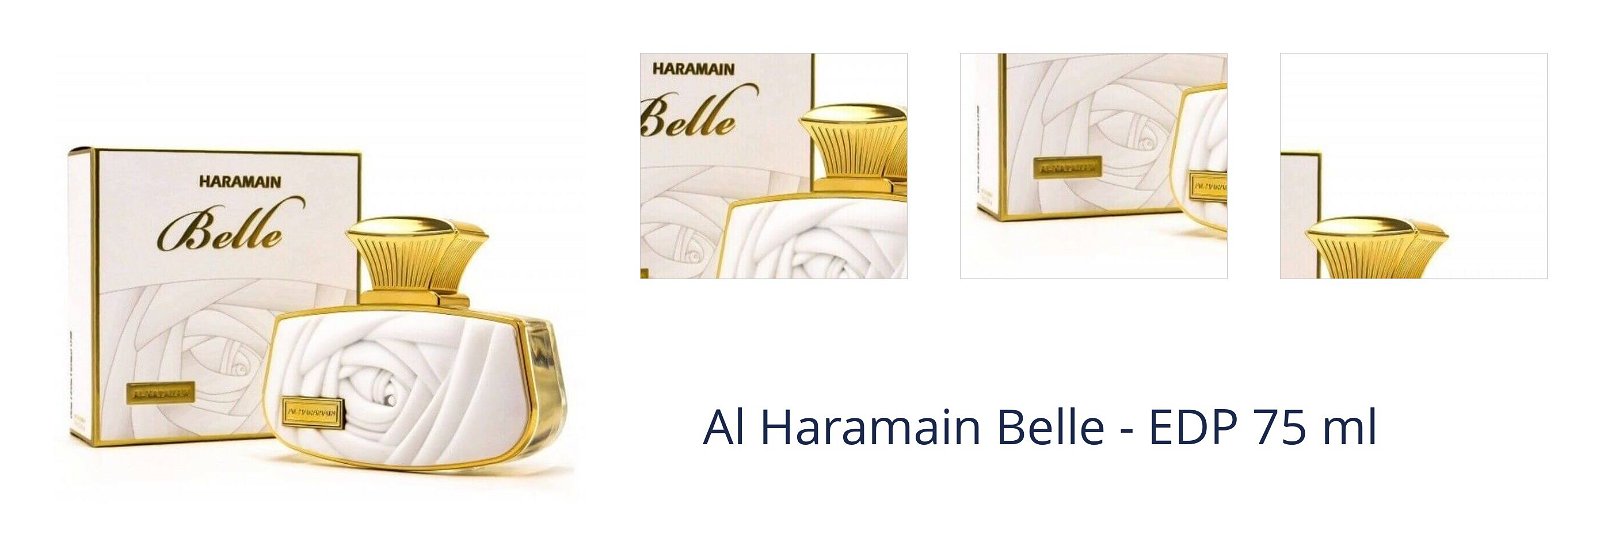 Al Haramain Belle - EDP 75 ml 1